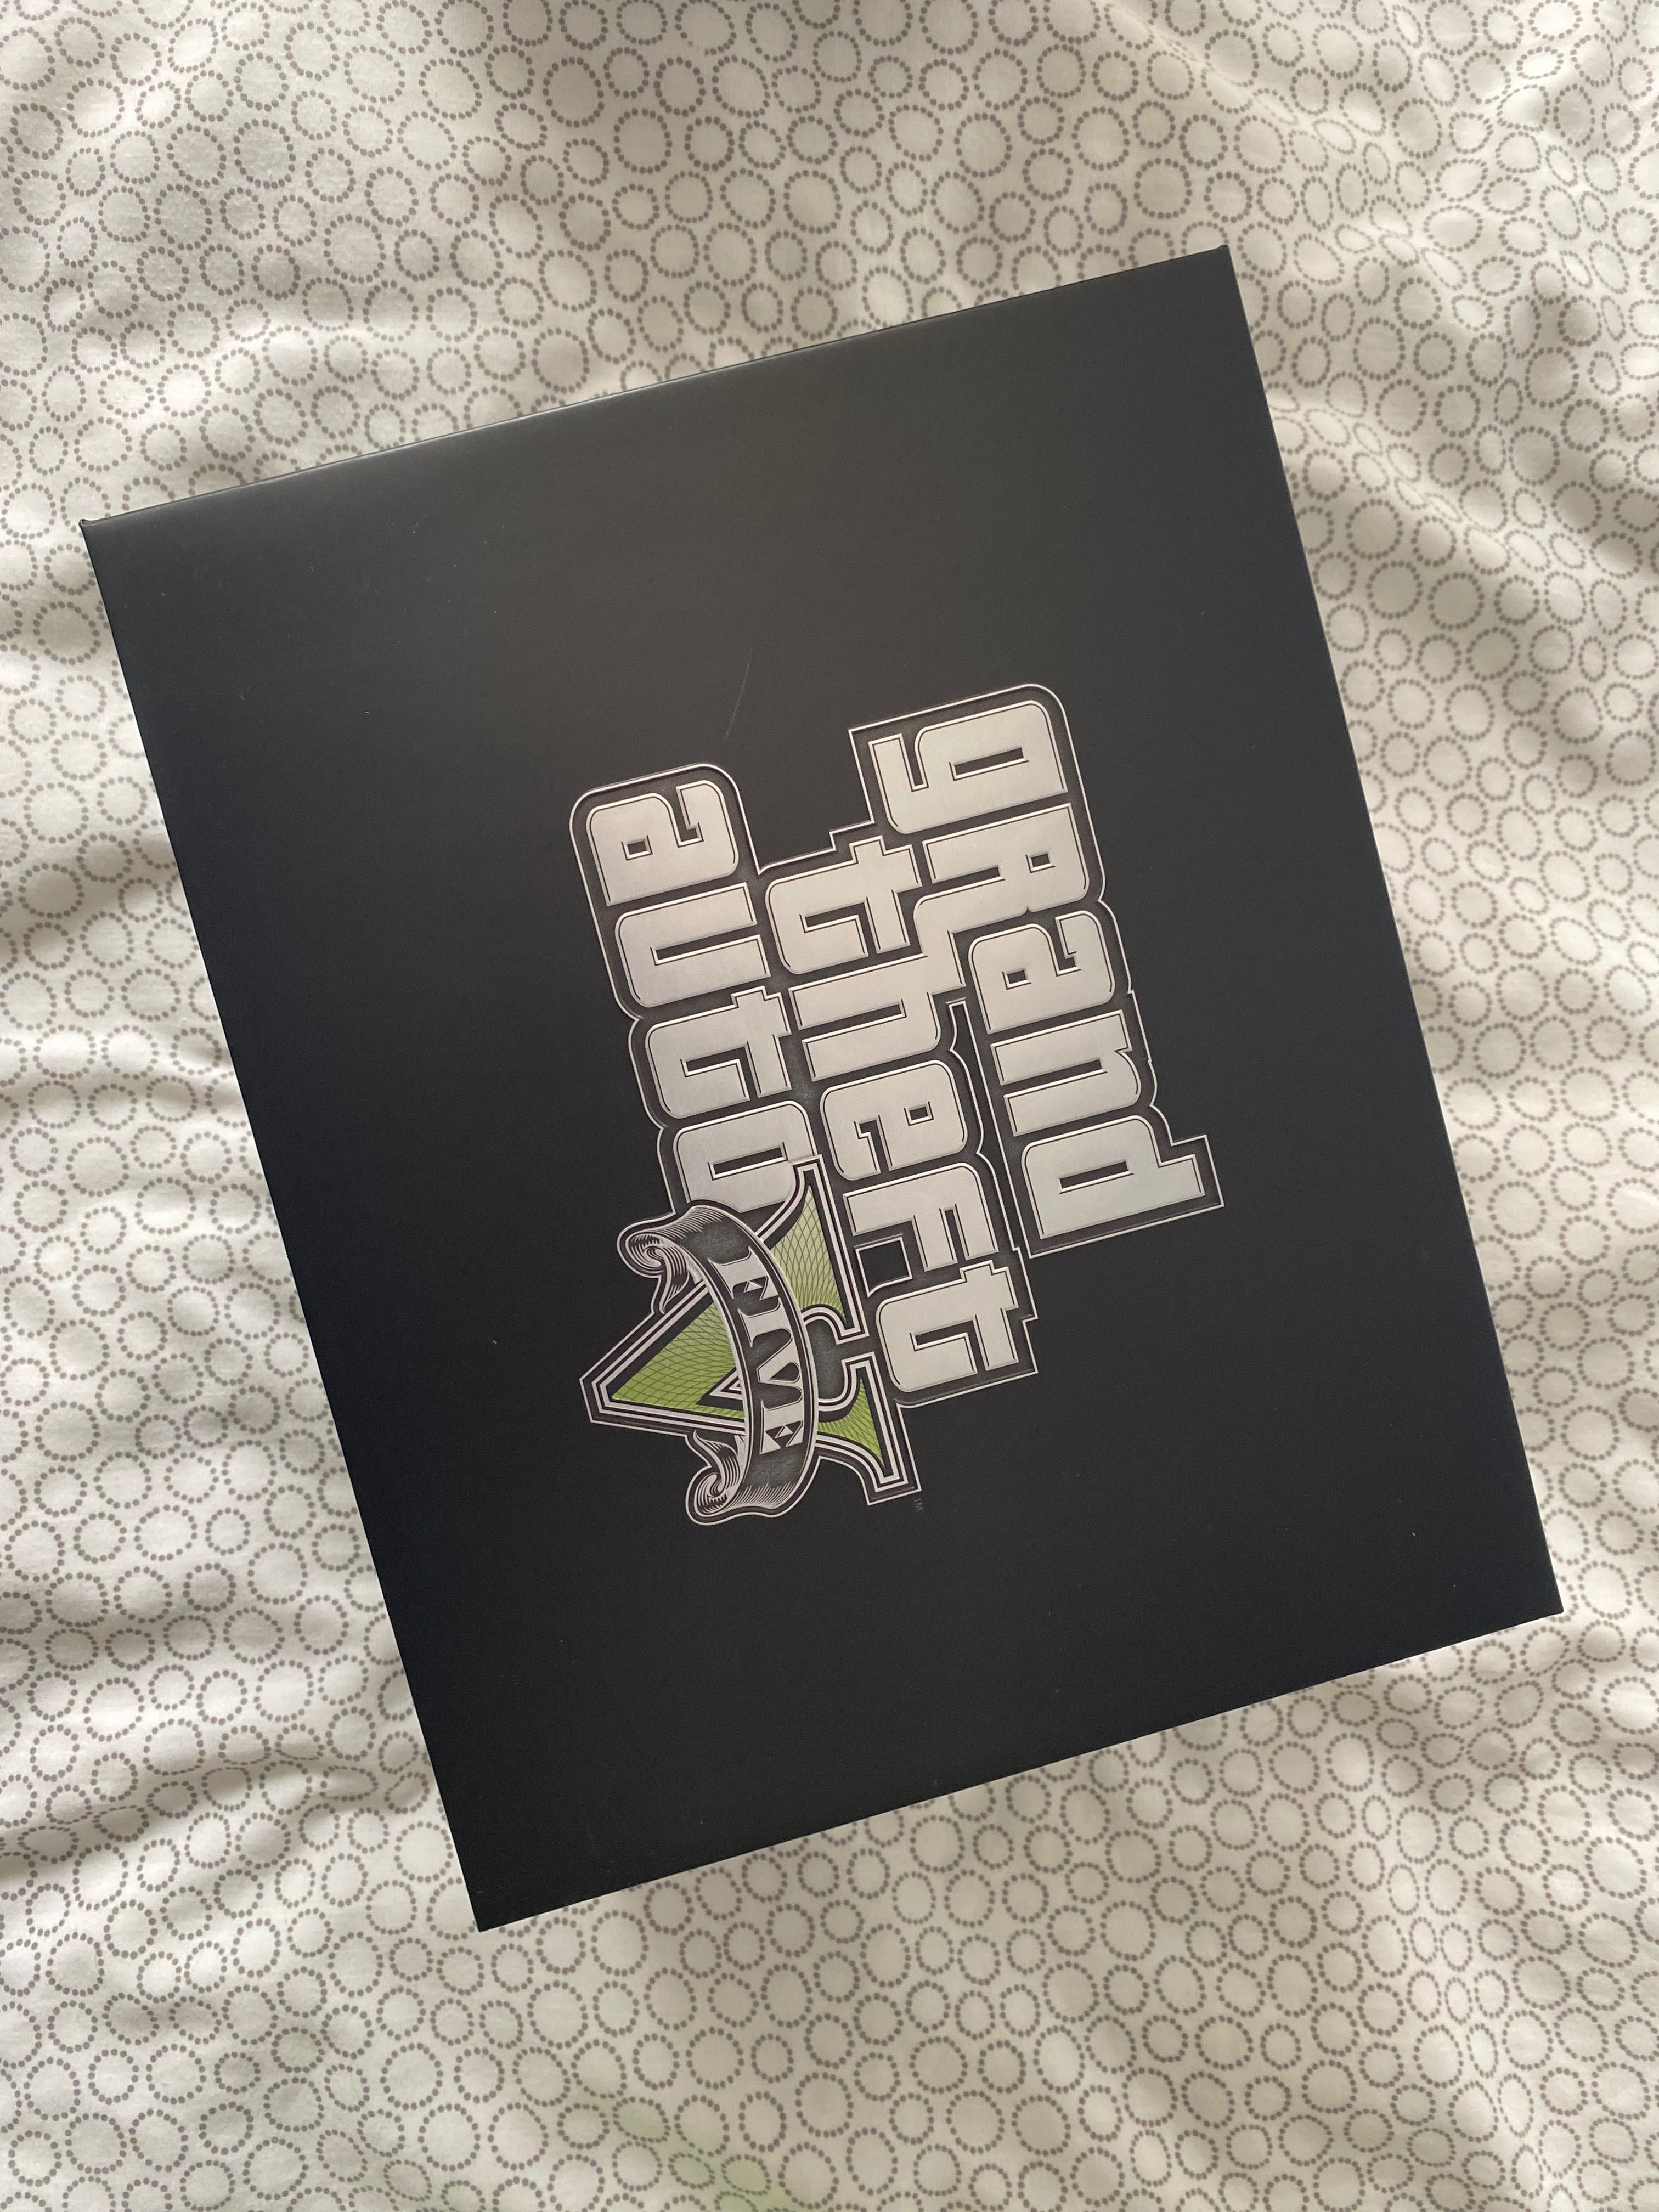 Grand Theft Auto V GTA V Edycja Kolekcjonerska X360